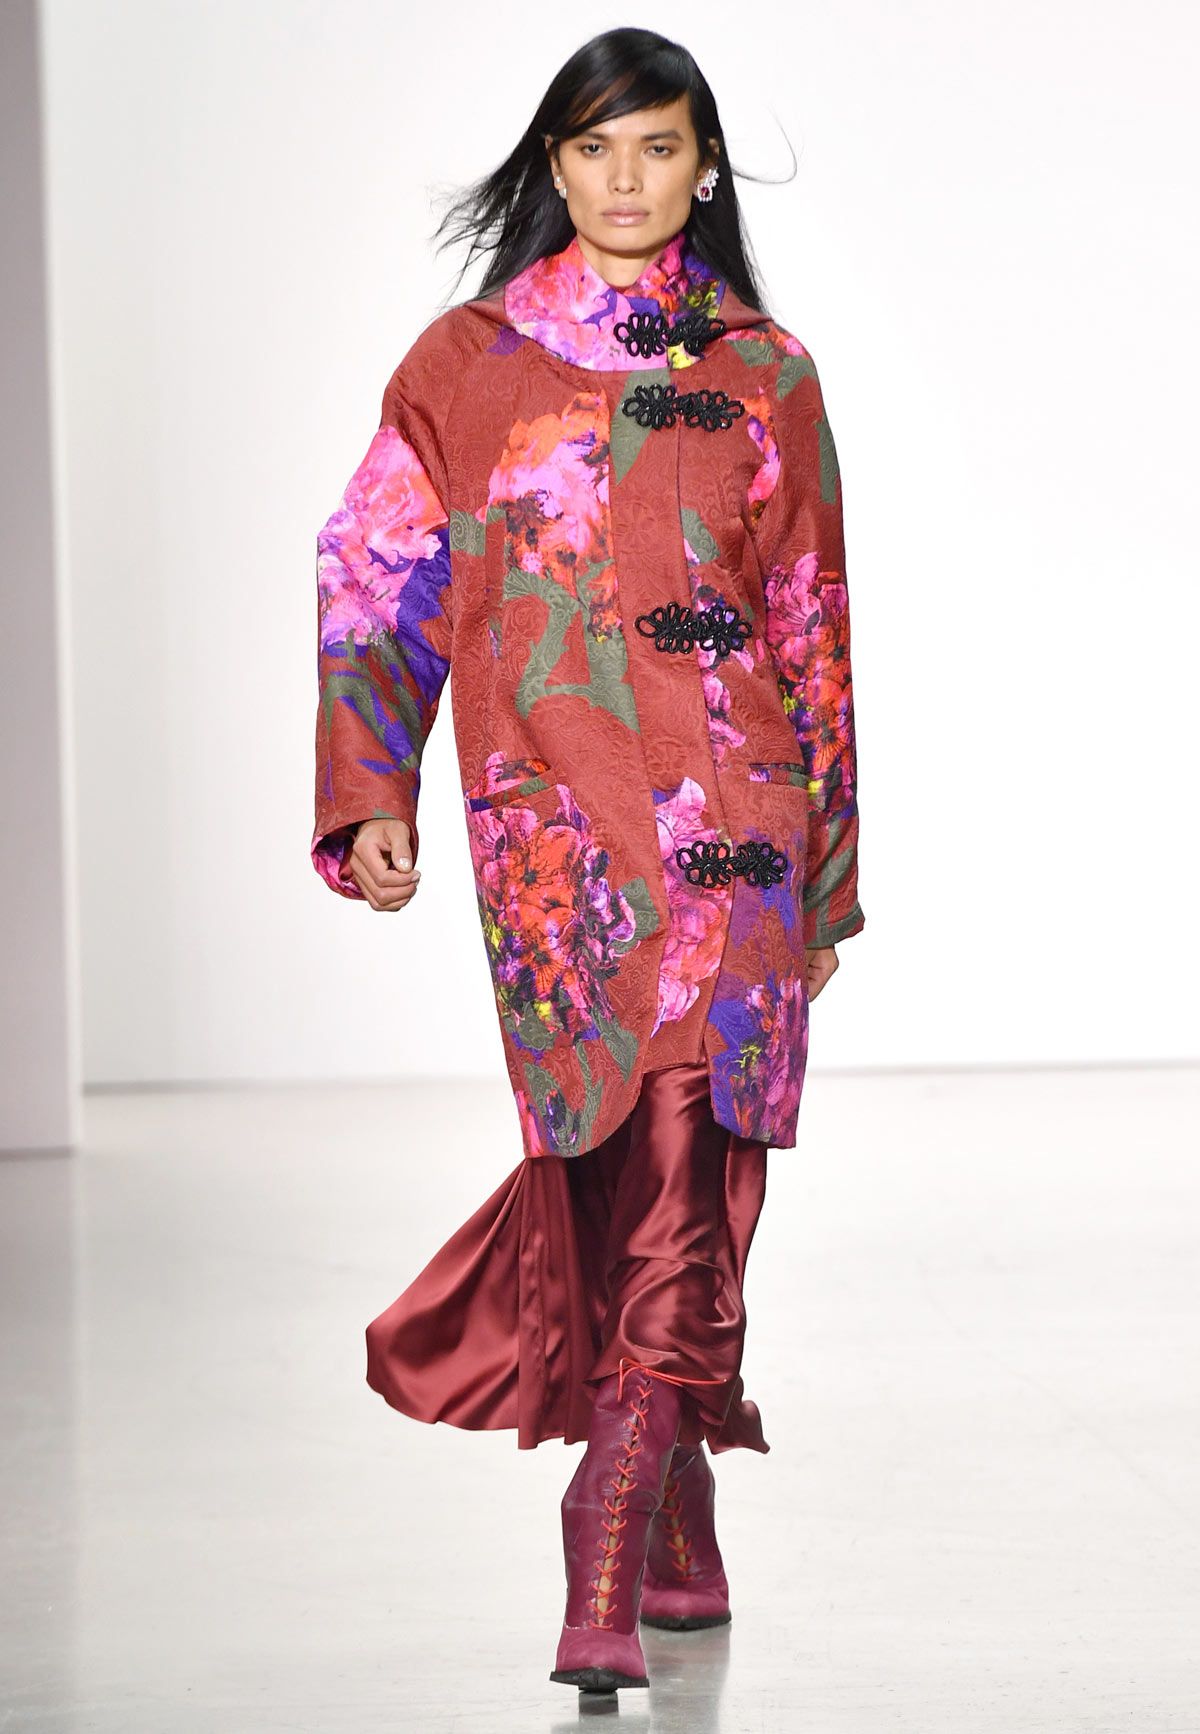 Prabal Gurung at New York Fashion Week - Rediff.com Get Ahead